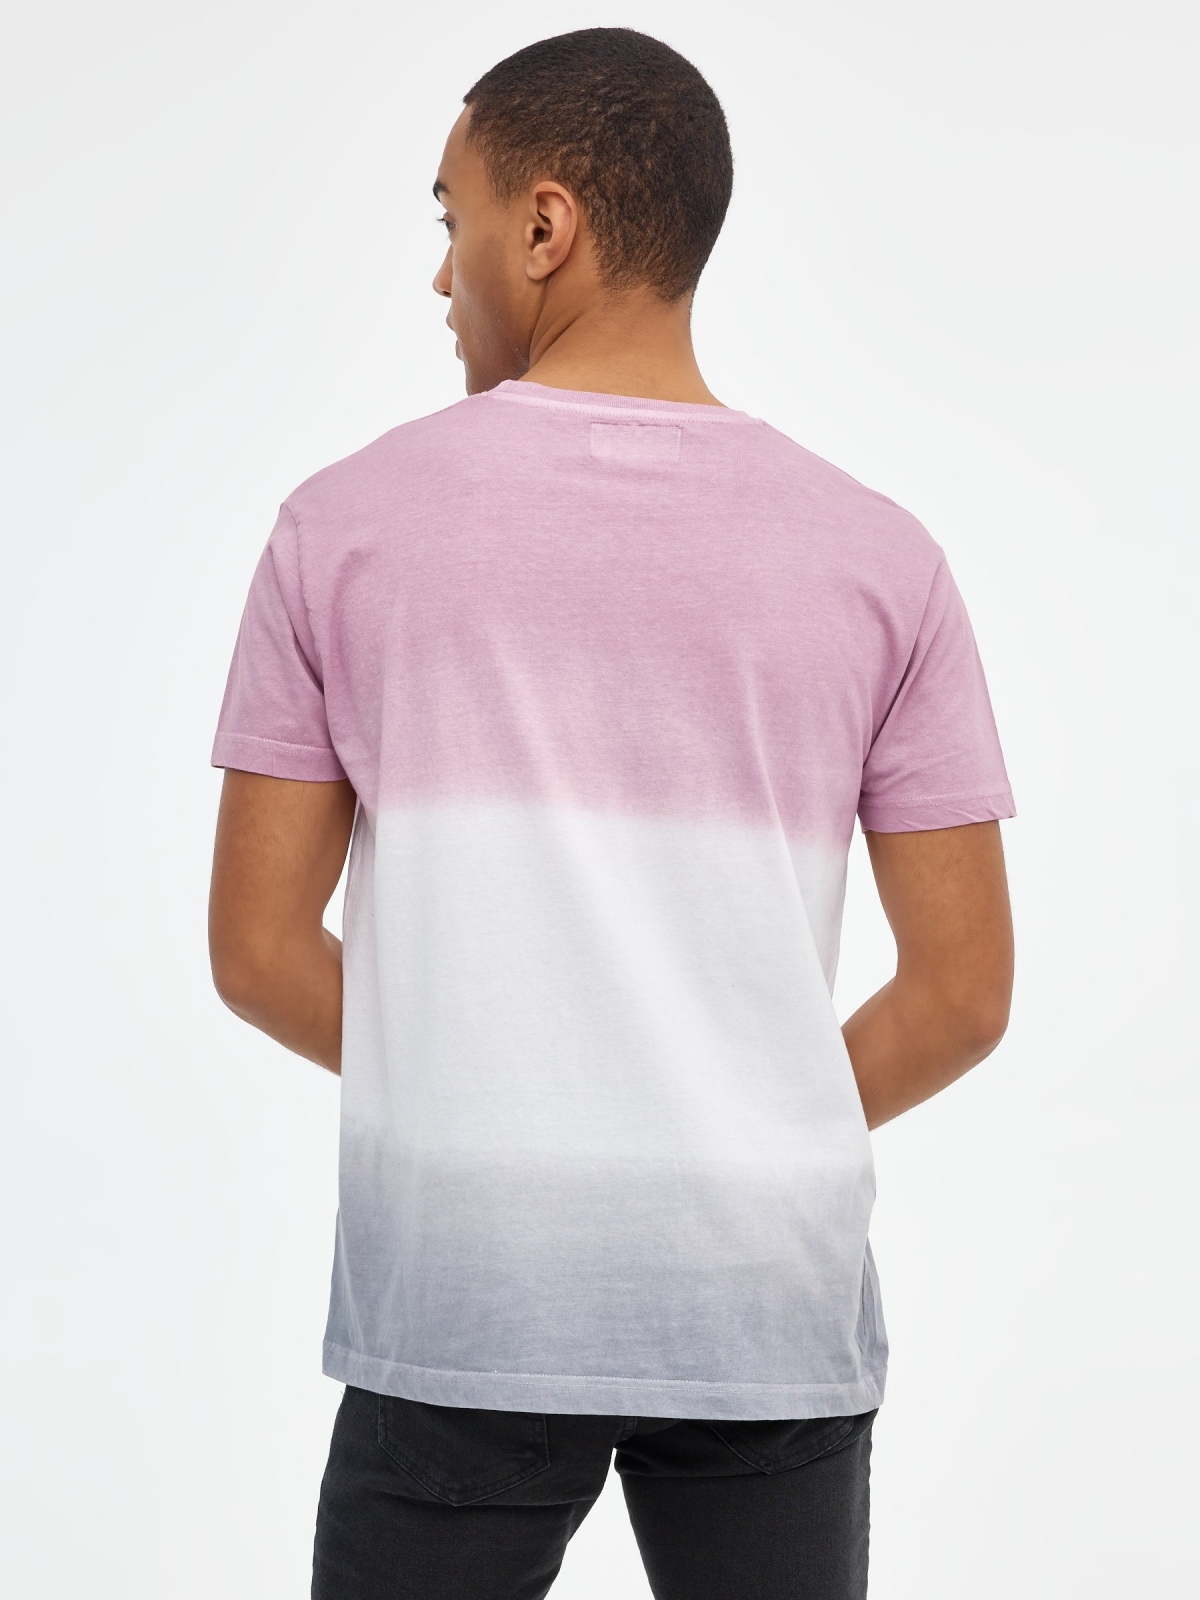 T-shirt degradada Tie&Dye púrpura vista meia traseira